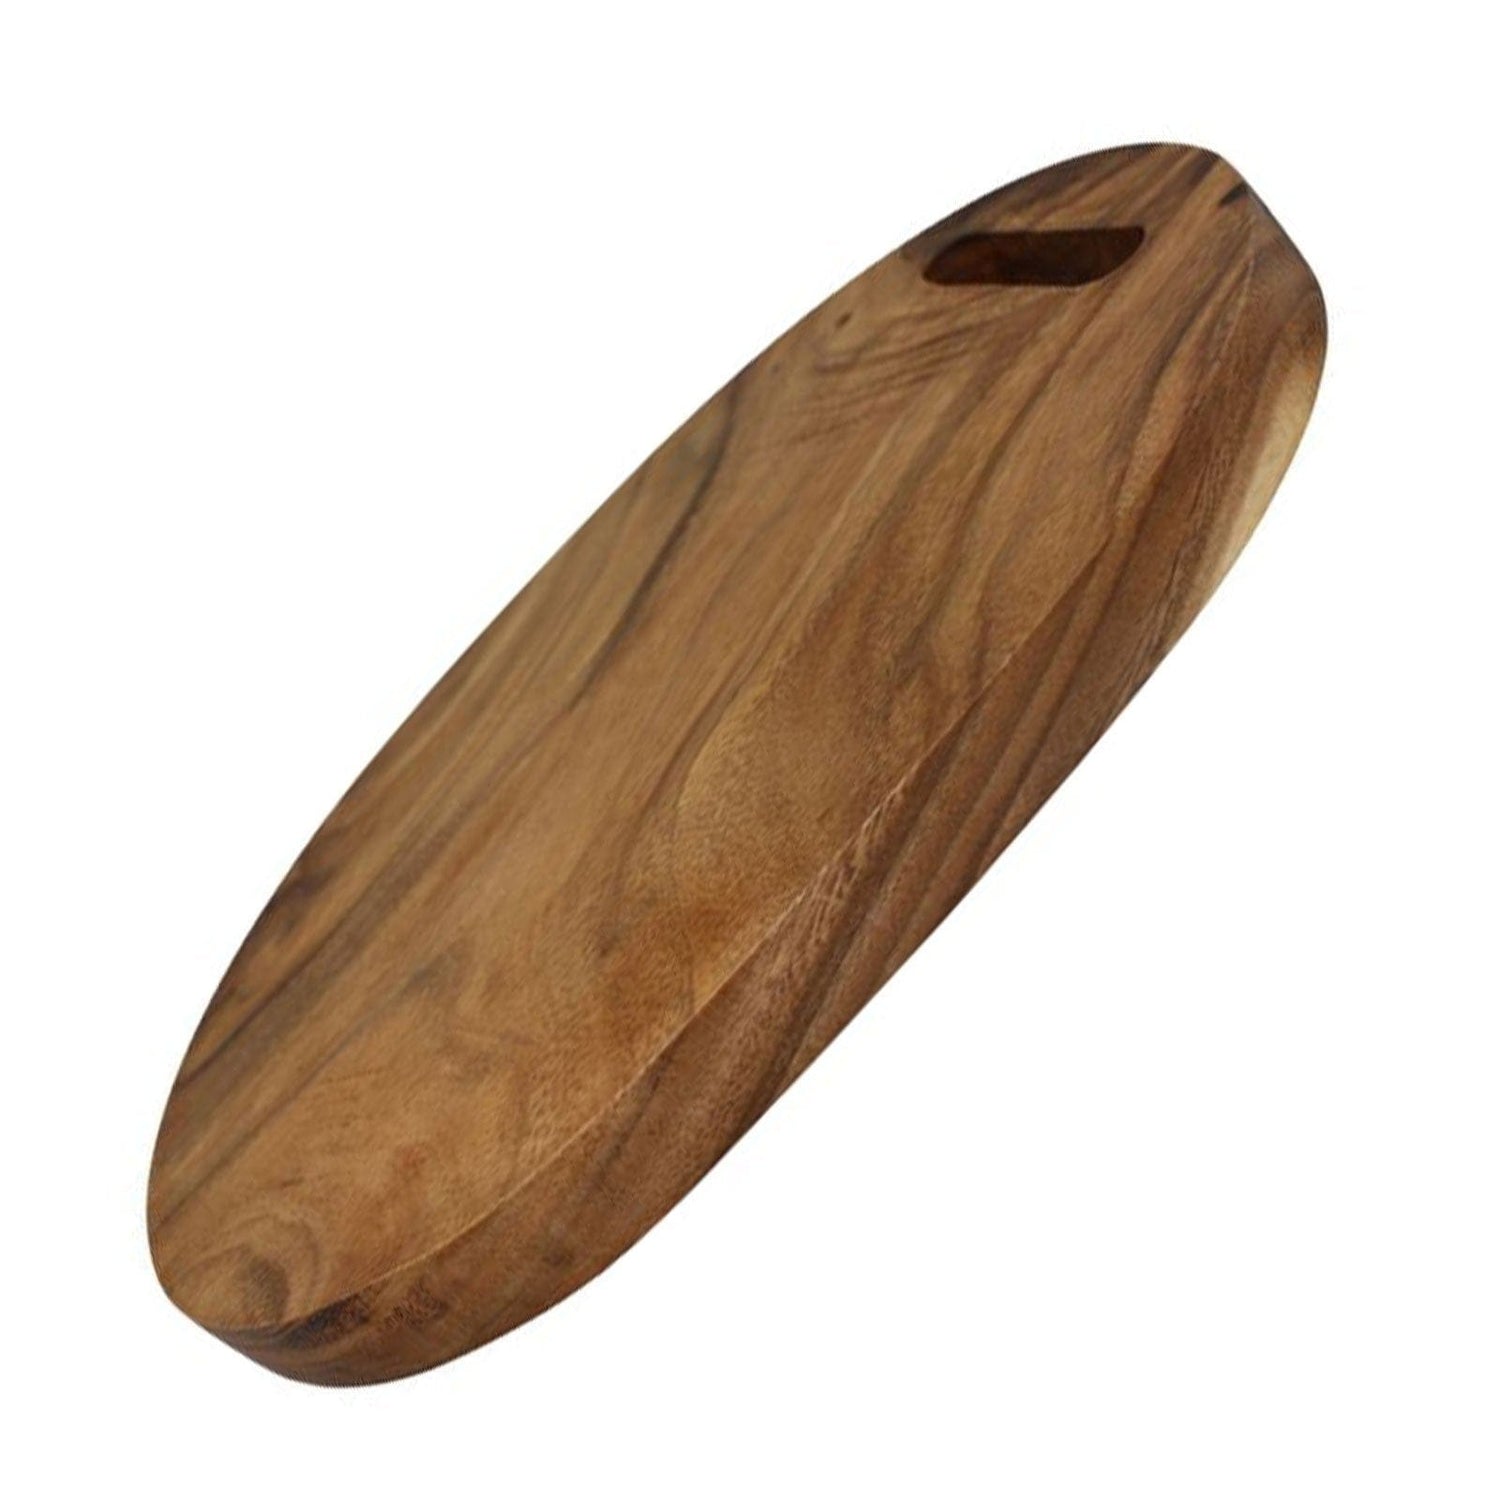 Acacia Wood Oval Board - 2 sizes.